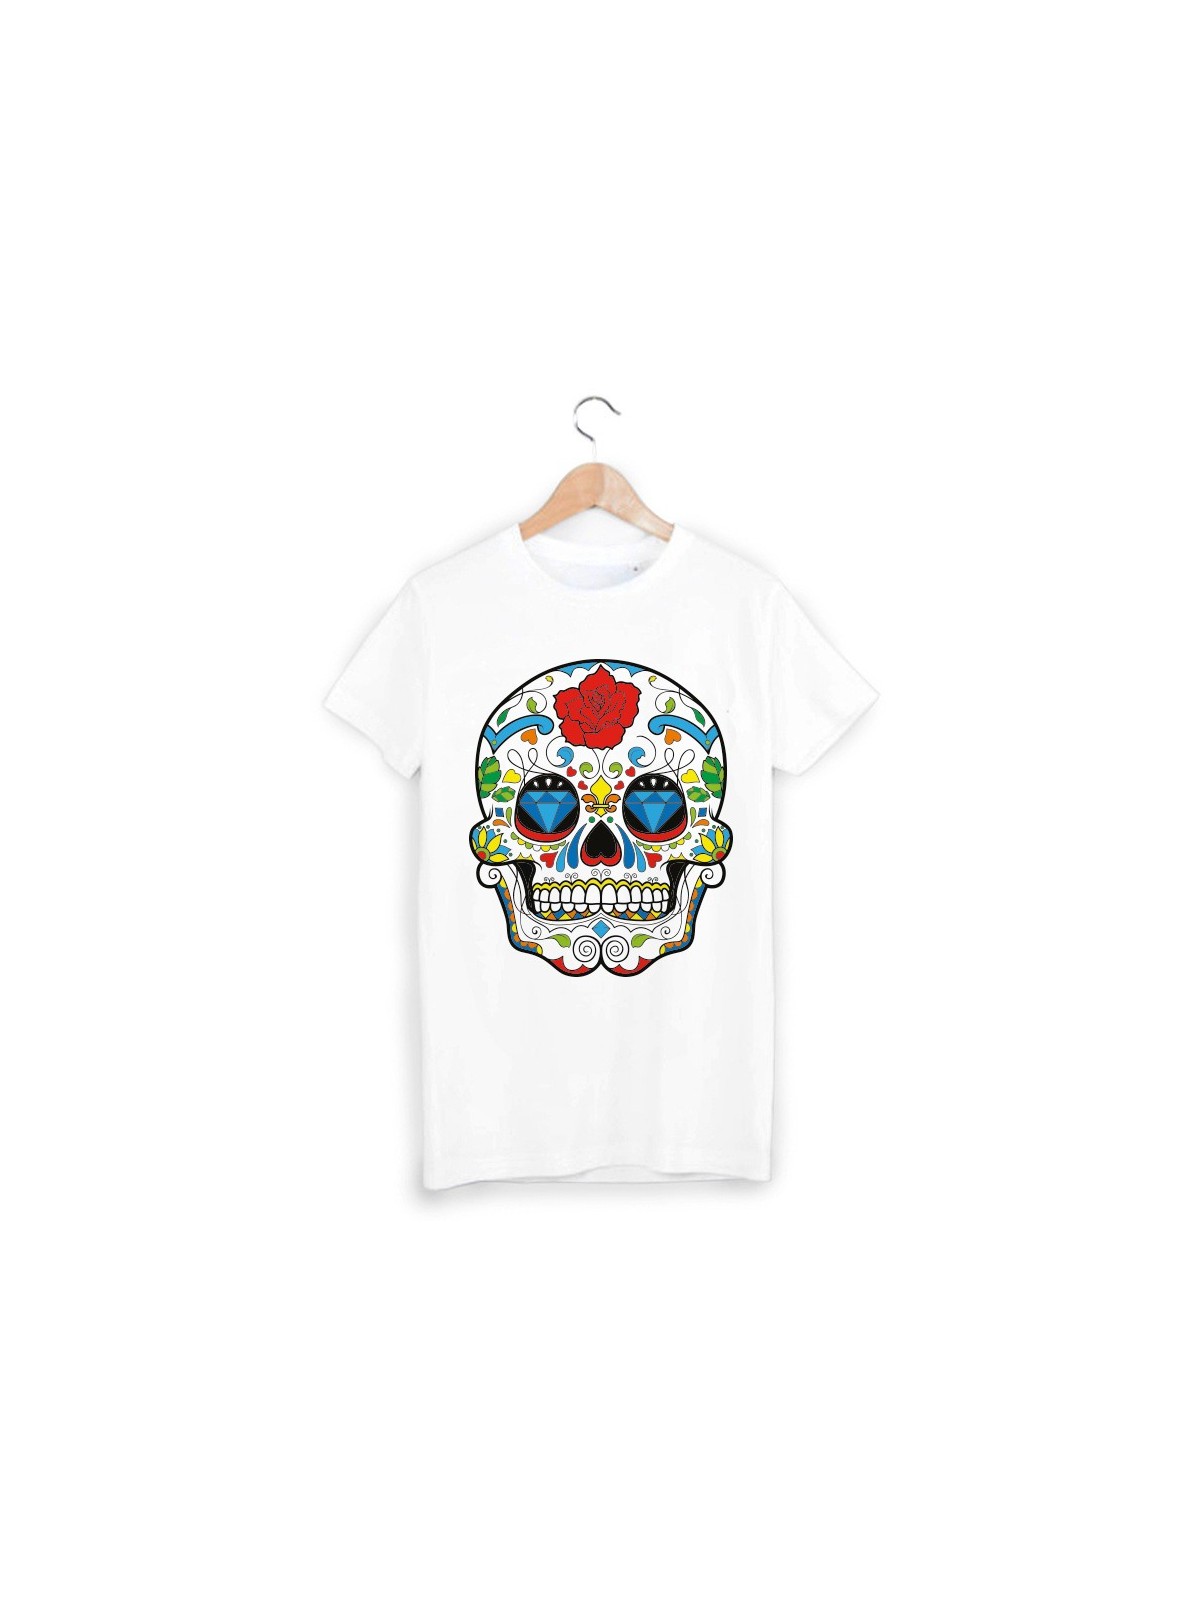 T-Shirt tÃªte de mort ref 951